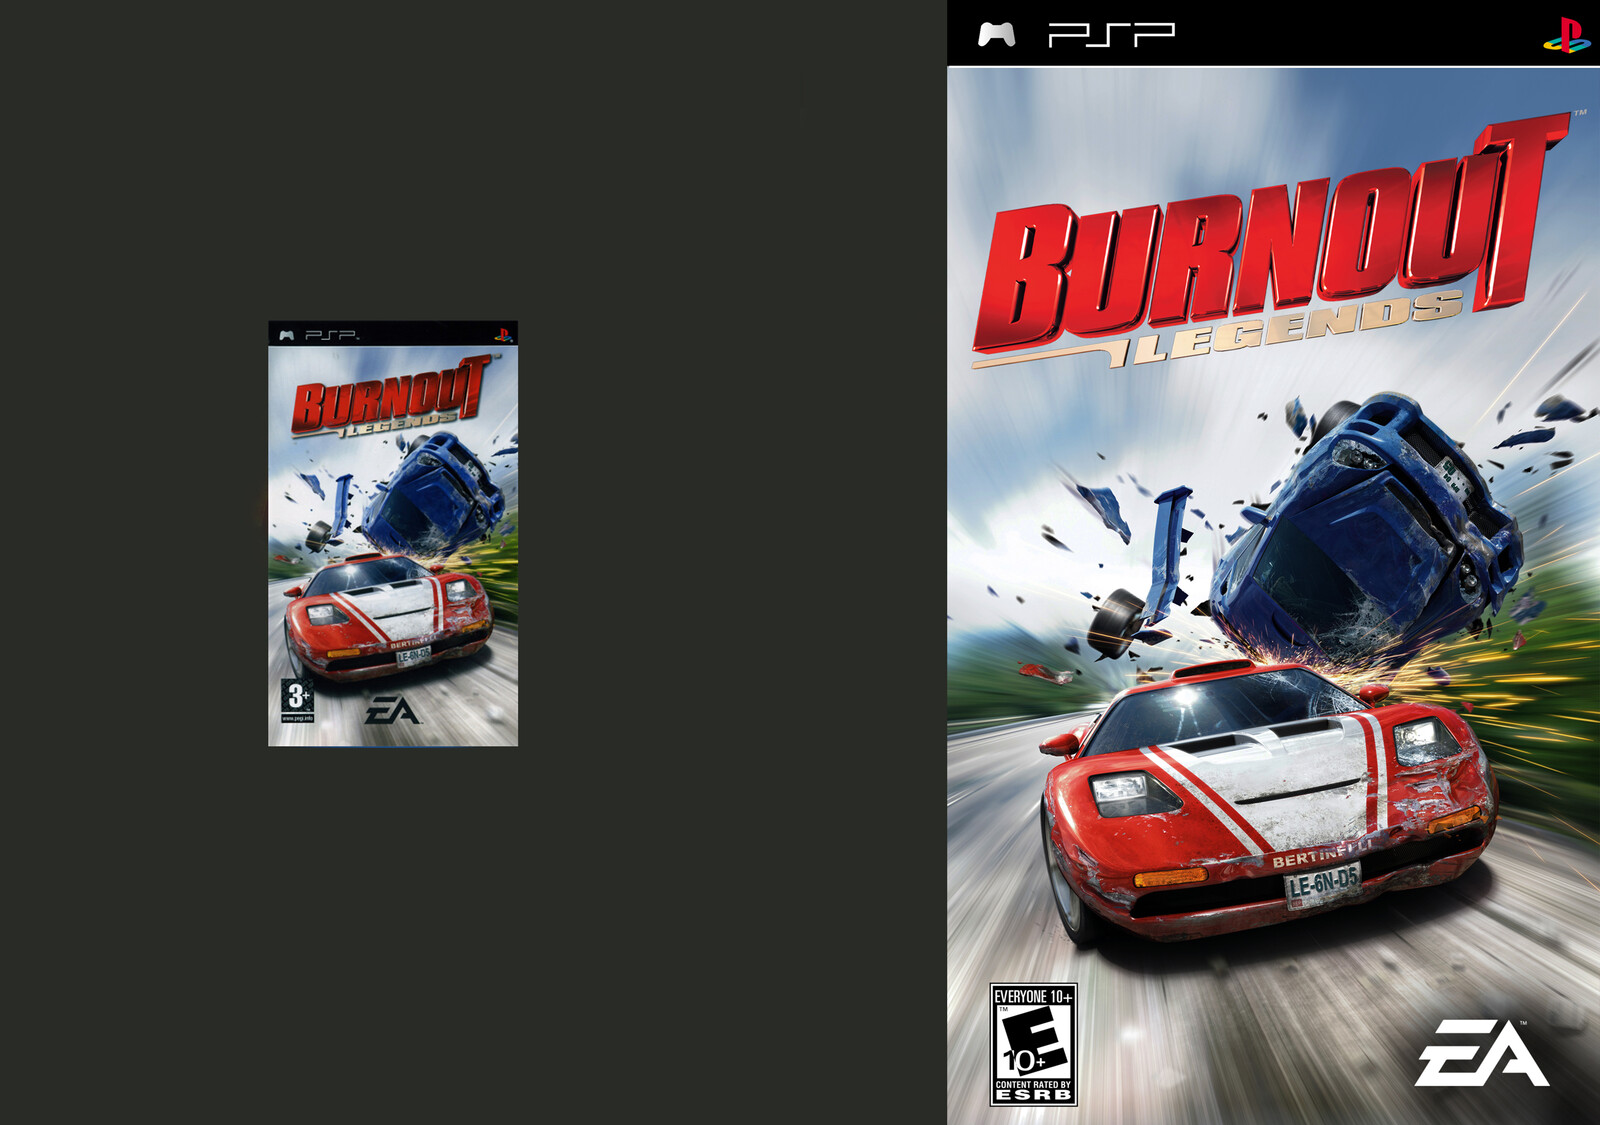 Burnout: Legends (2006) - Scanned cover vs. Upscaled